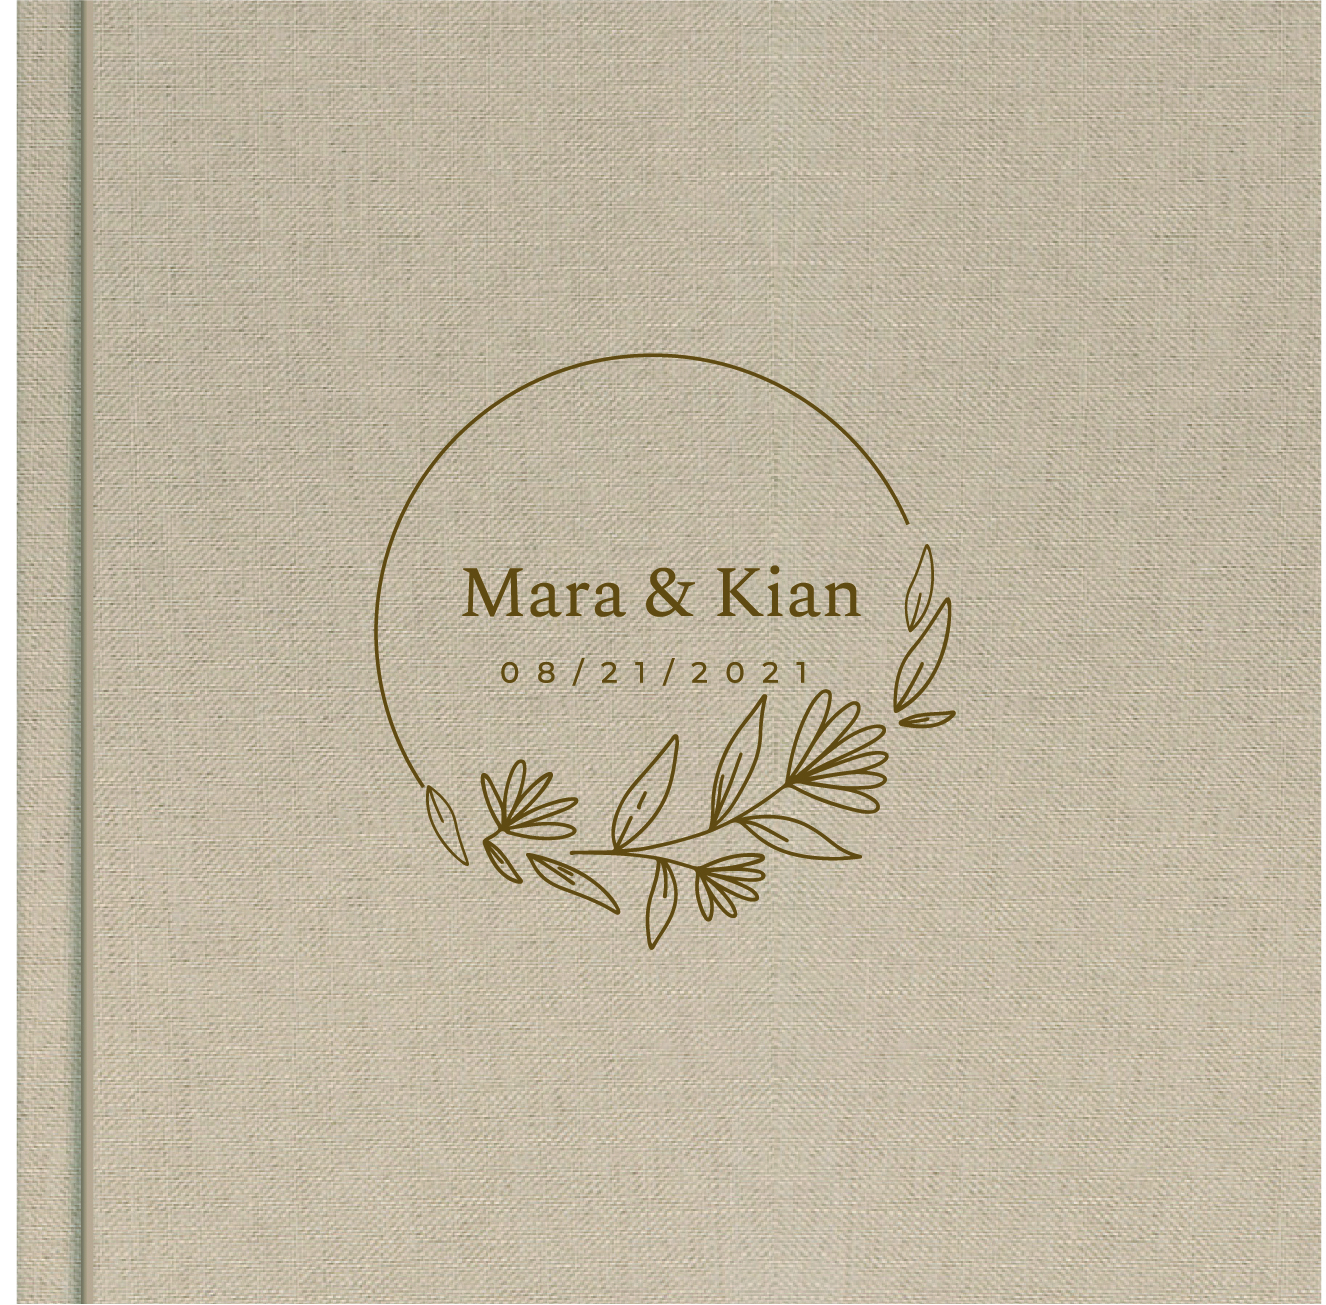 Laser etched wedding album cover design